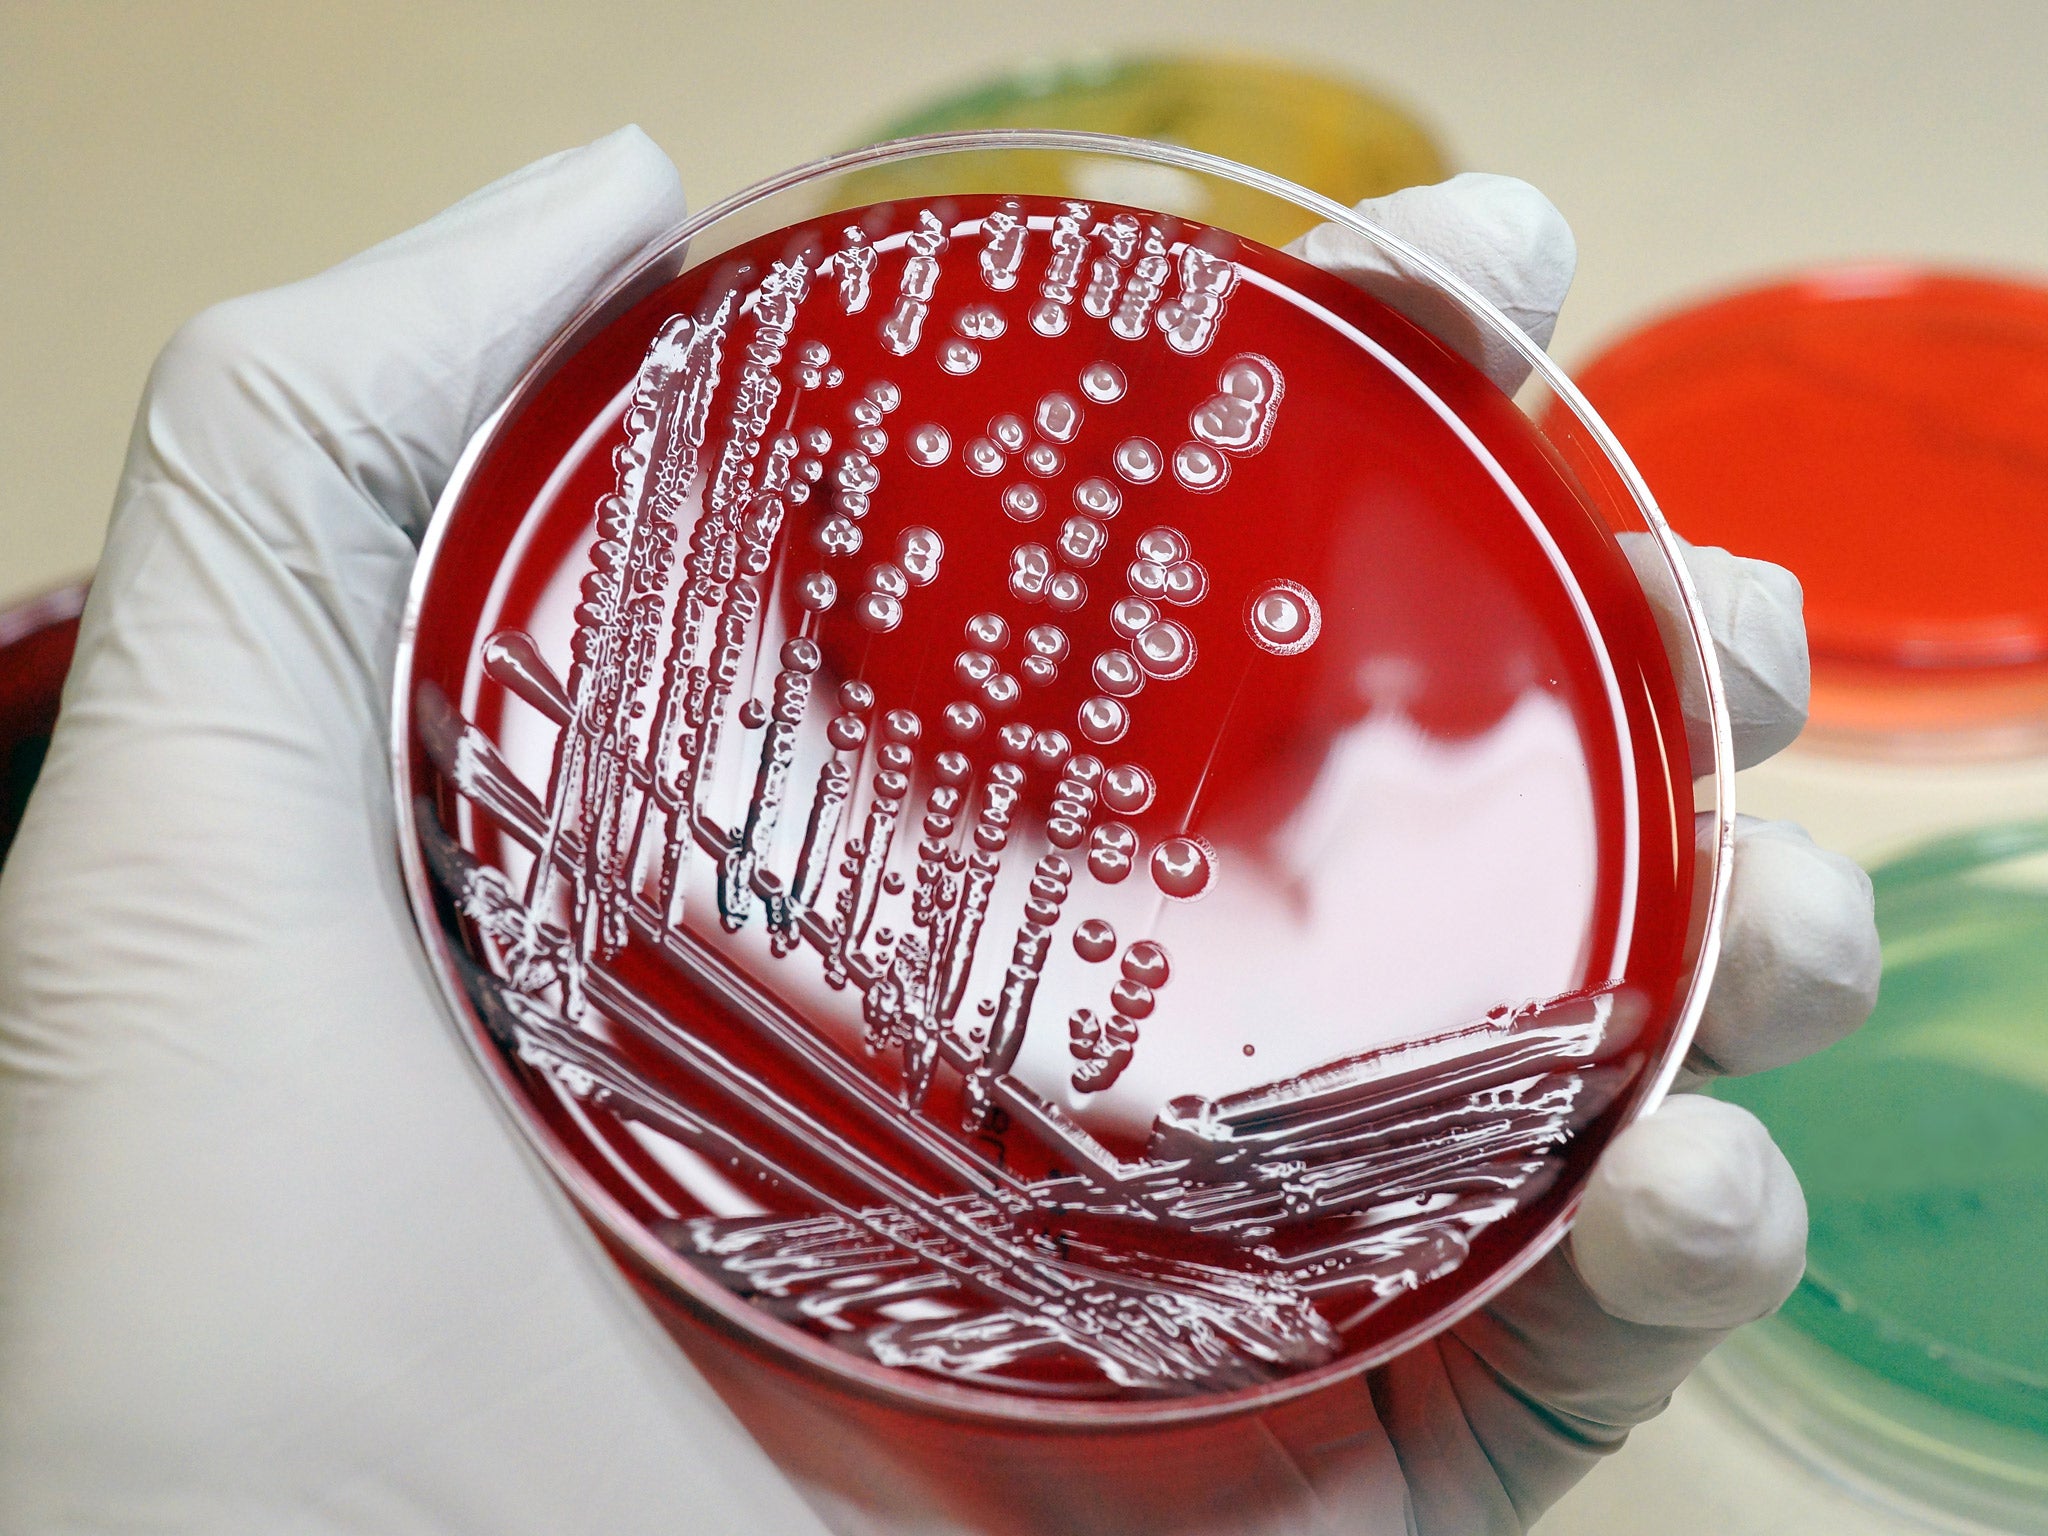 Colonies of a multi-resistant coliform bacteria (E.coli) 